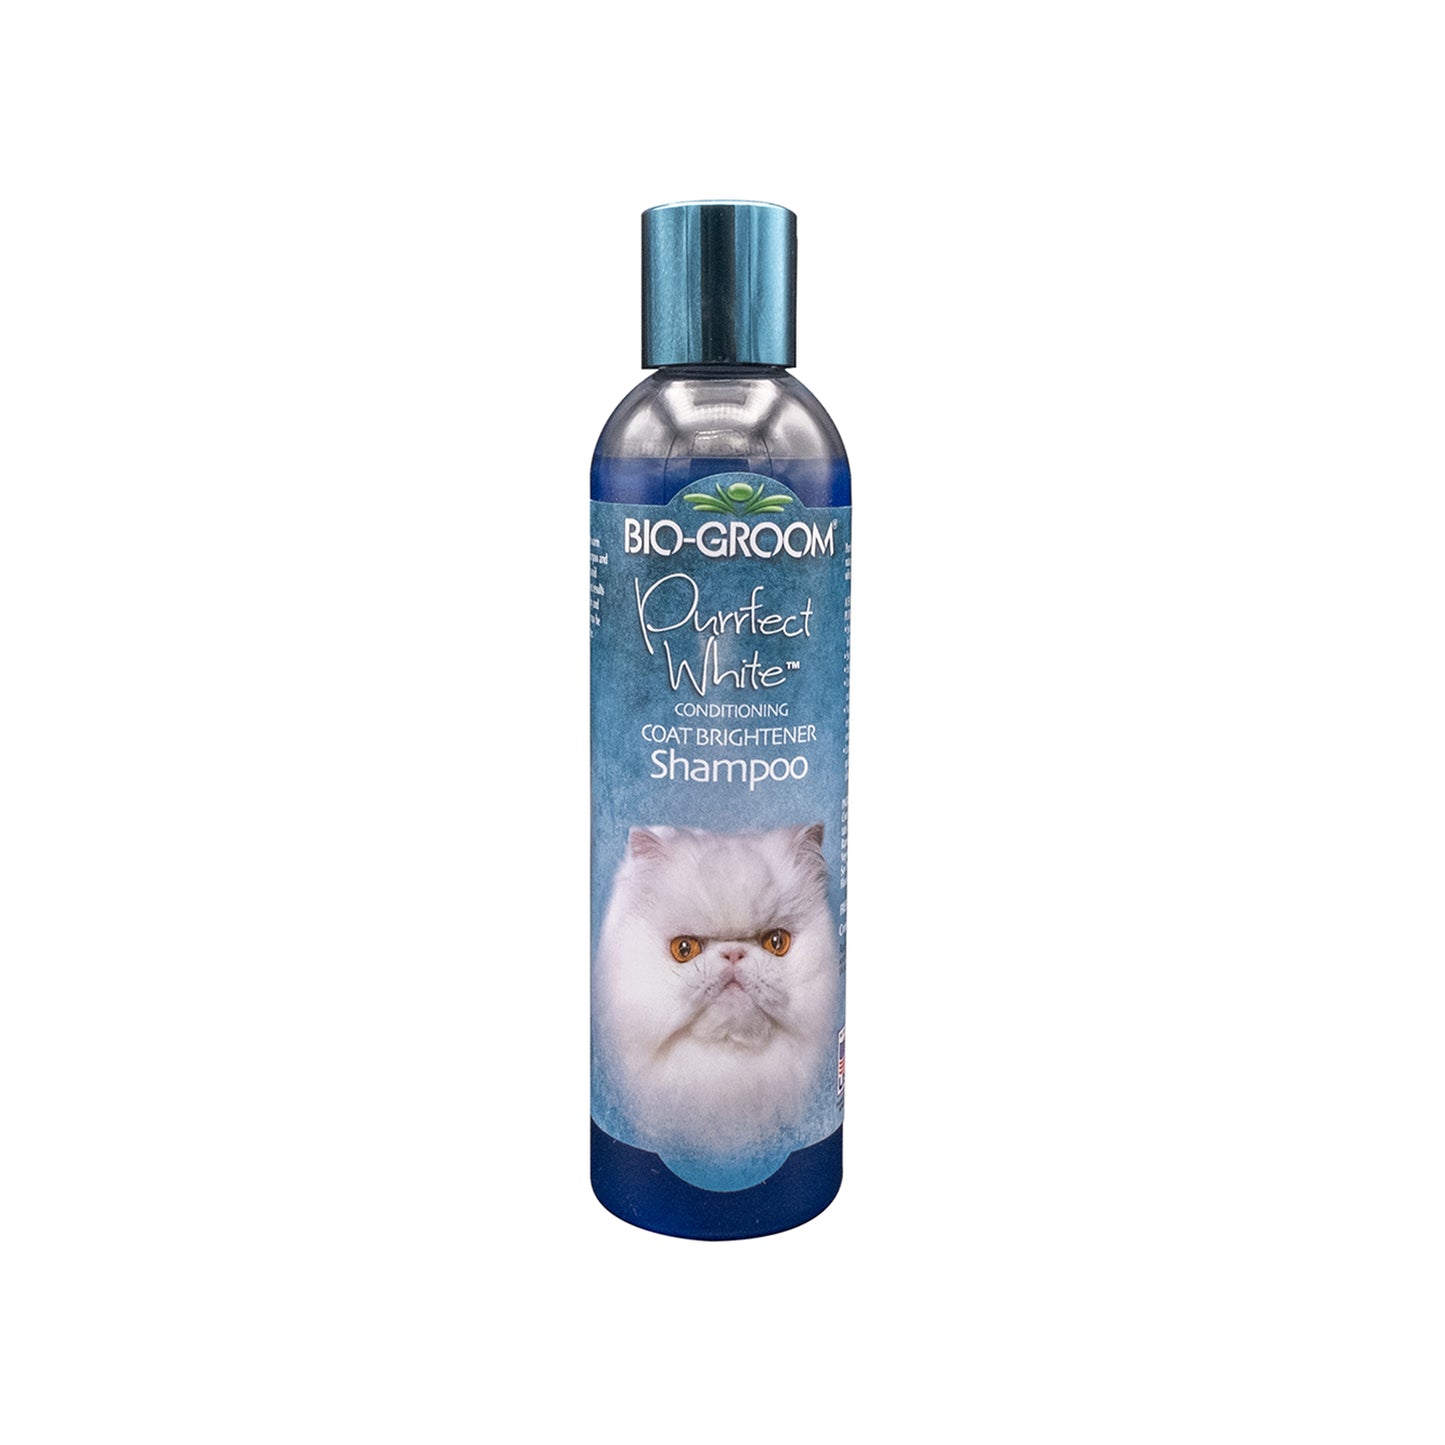 Bio Groom - Purrfect White Cat Conditioning Shampoo